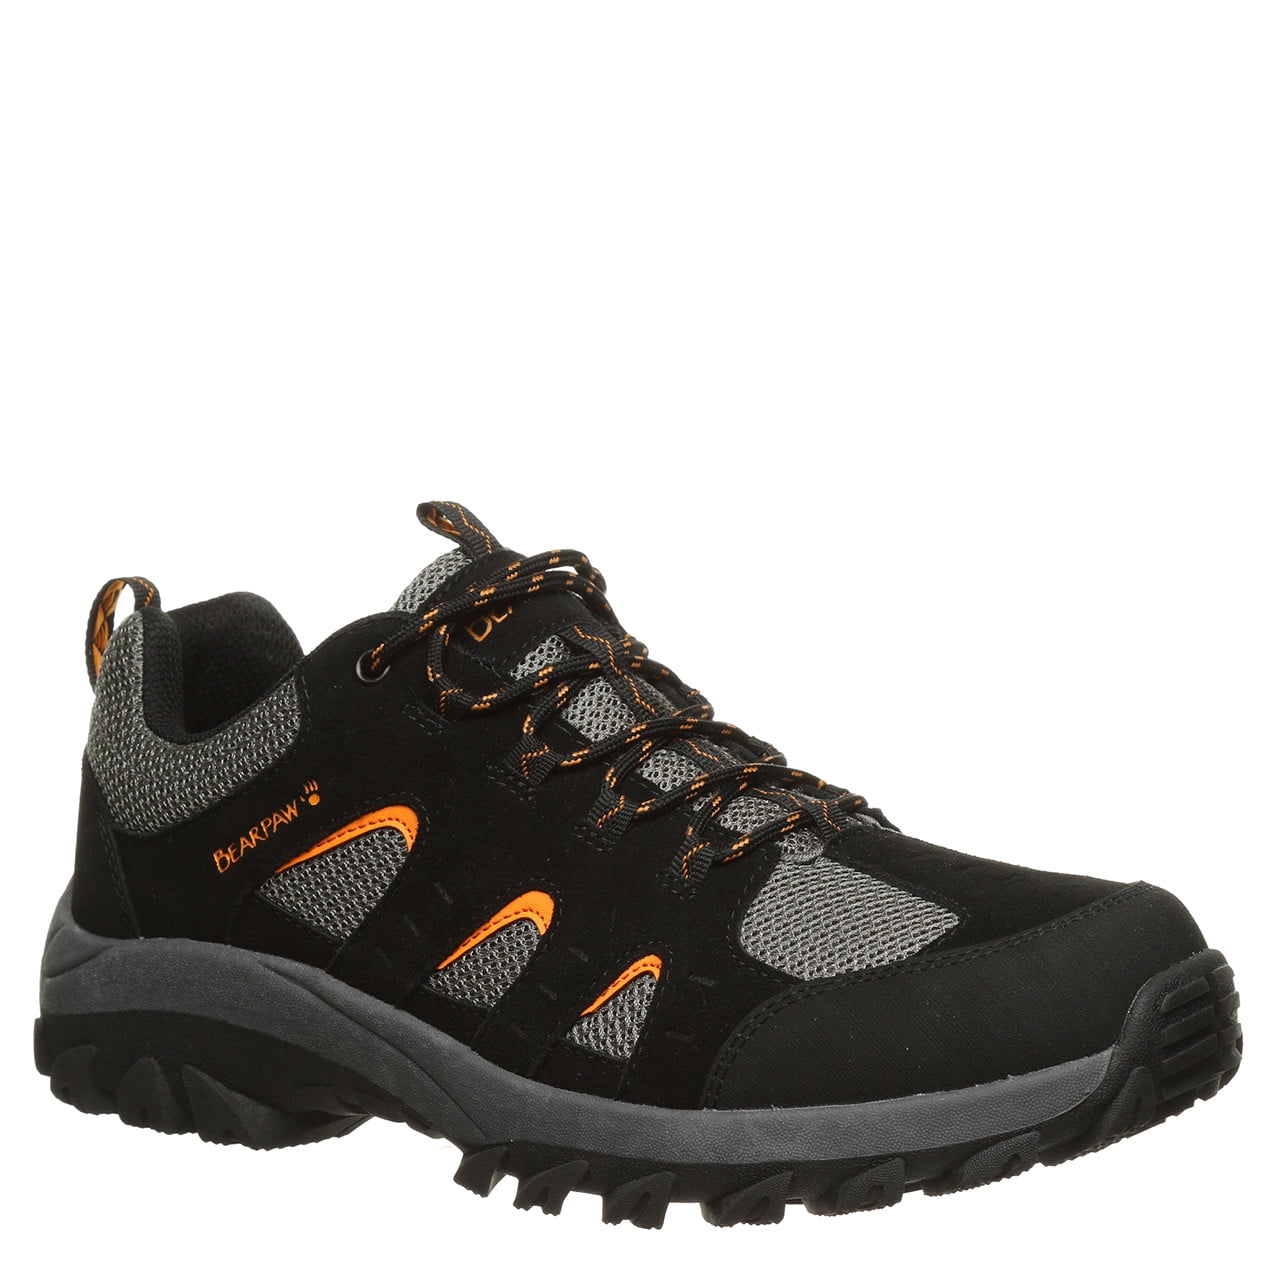 Bearpaw Men's Blaze Hiking Shoes - Medium & Wide Width - Walmart.com